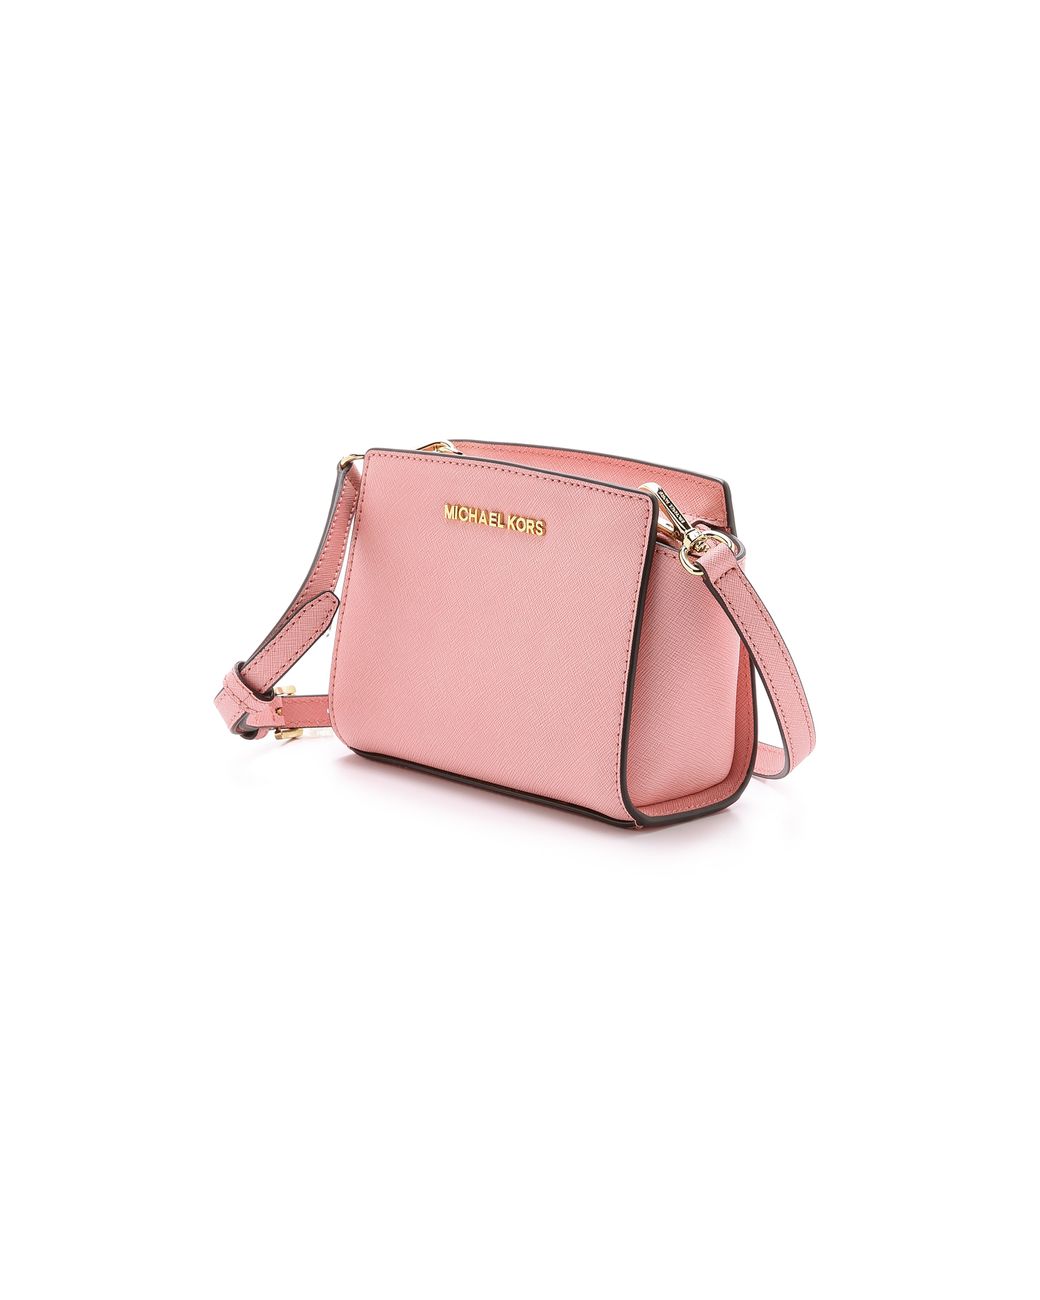 NEW Michael Kors Pebbled Leather Crossbody Bag Light PinkBlush Color   eBay